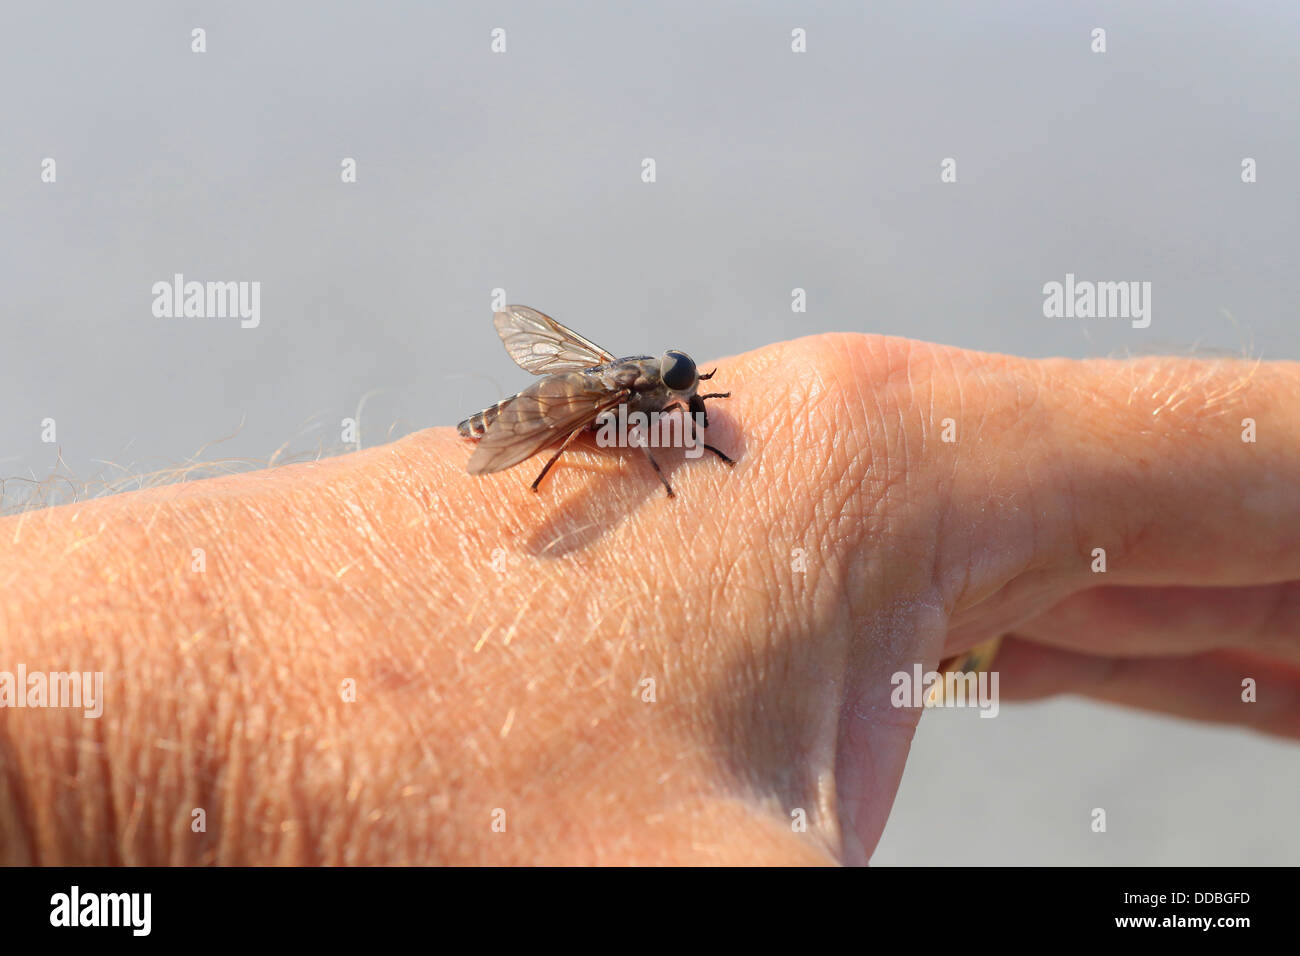 Tabanus nigrovittatus, the greenhead horse fly, salt marsh greenhead, greenhead or greenfly on a person's hand ready to bite Stock Photo